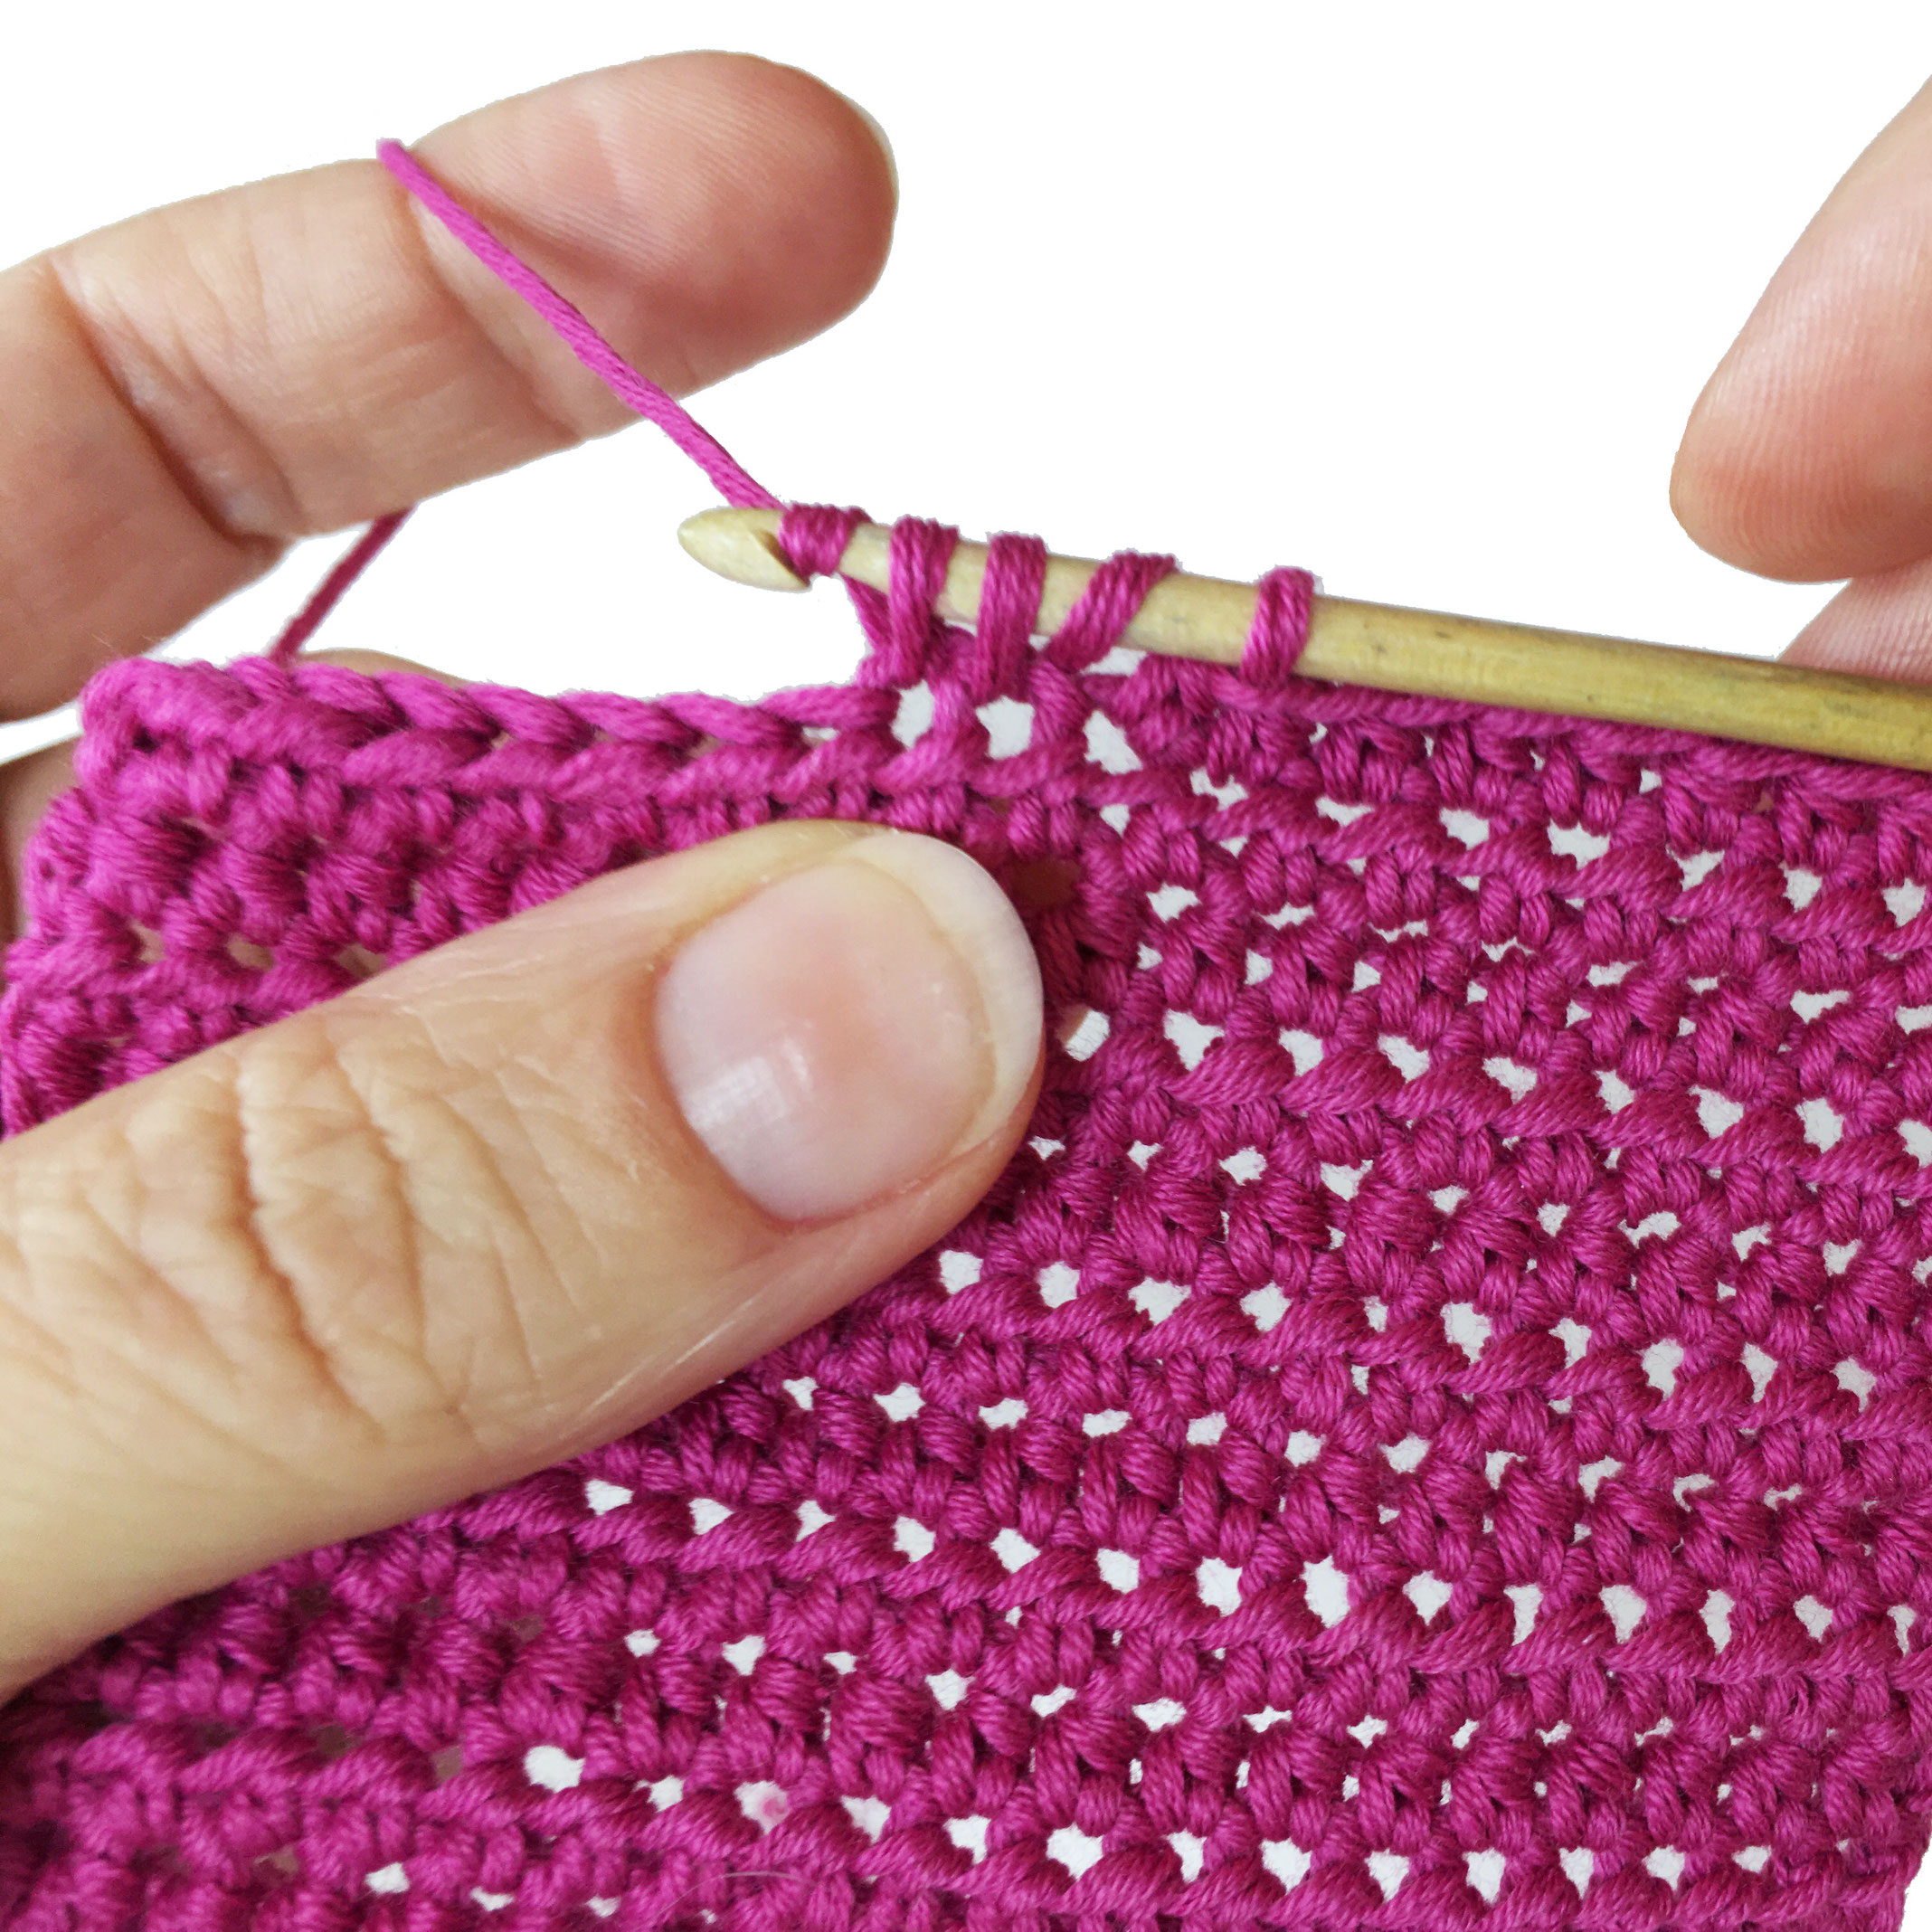 decrease halfdouble crochet